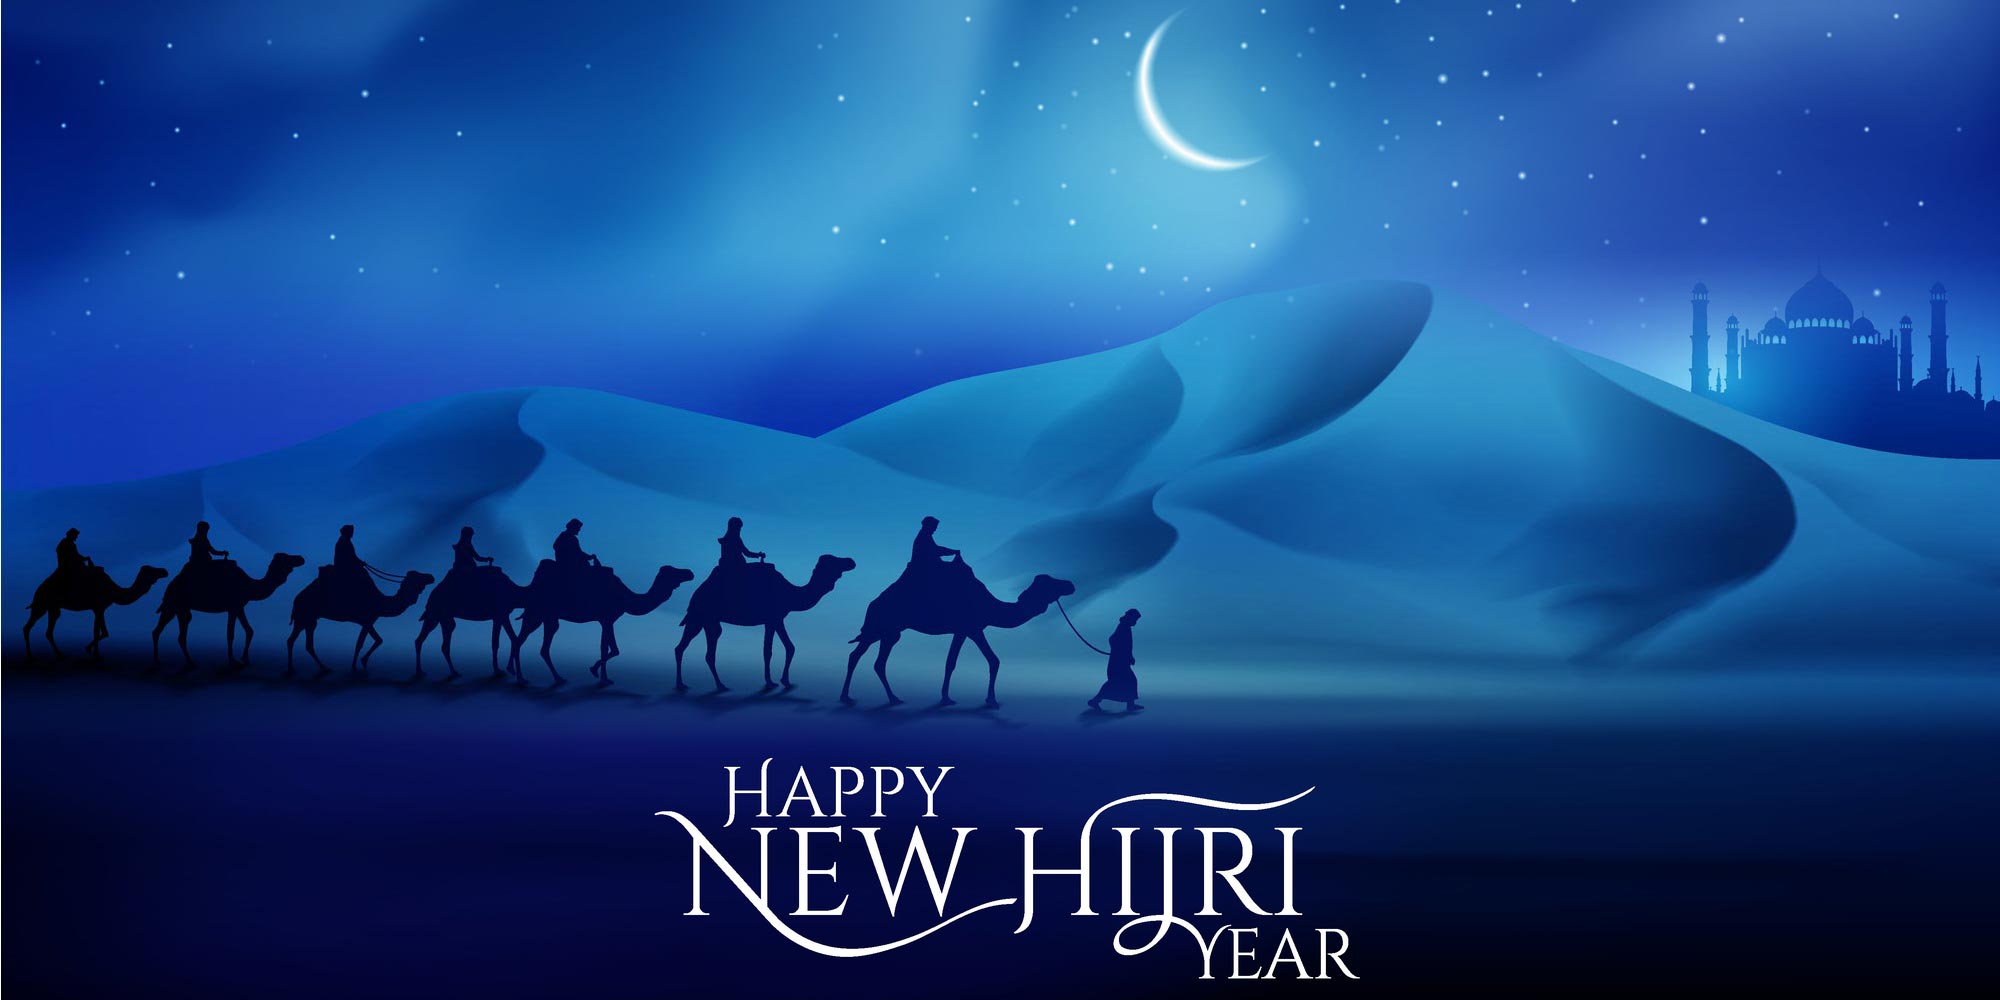 hijri new year